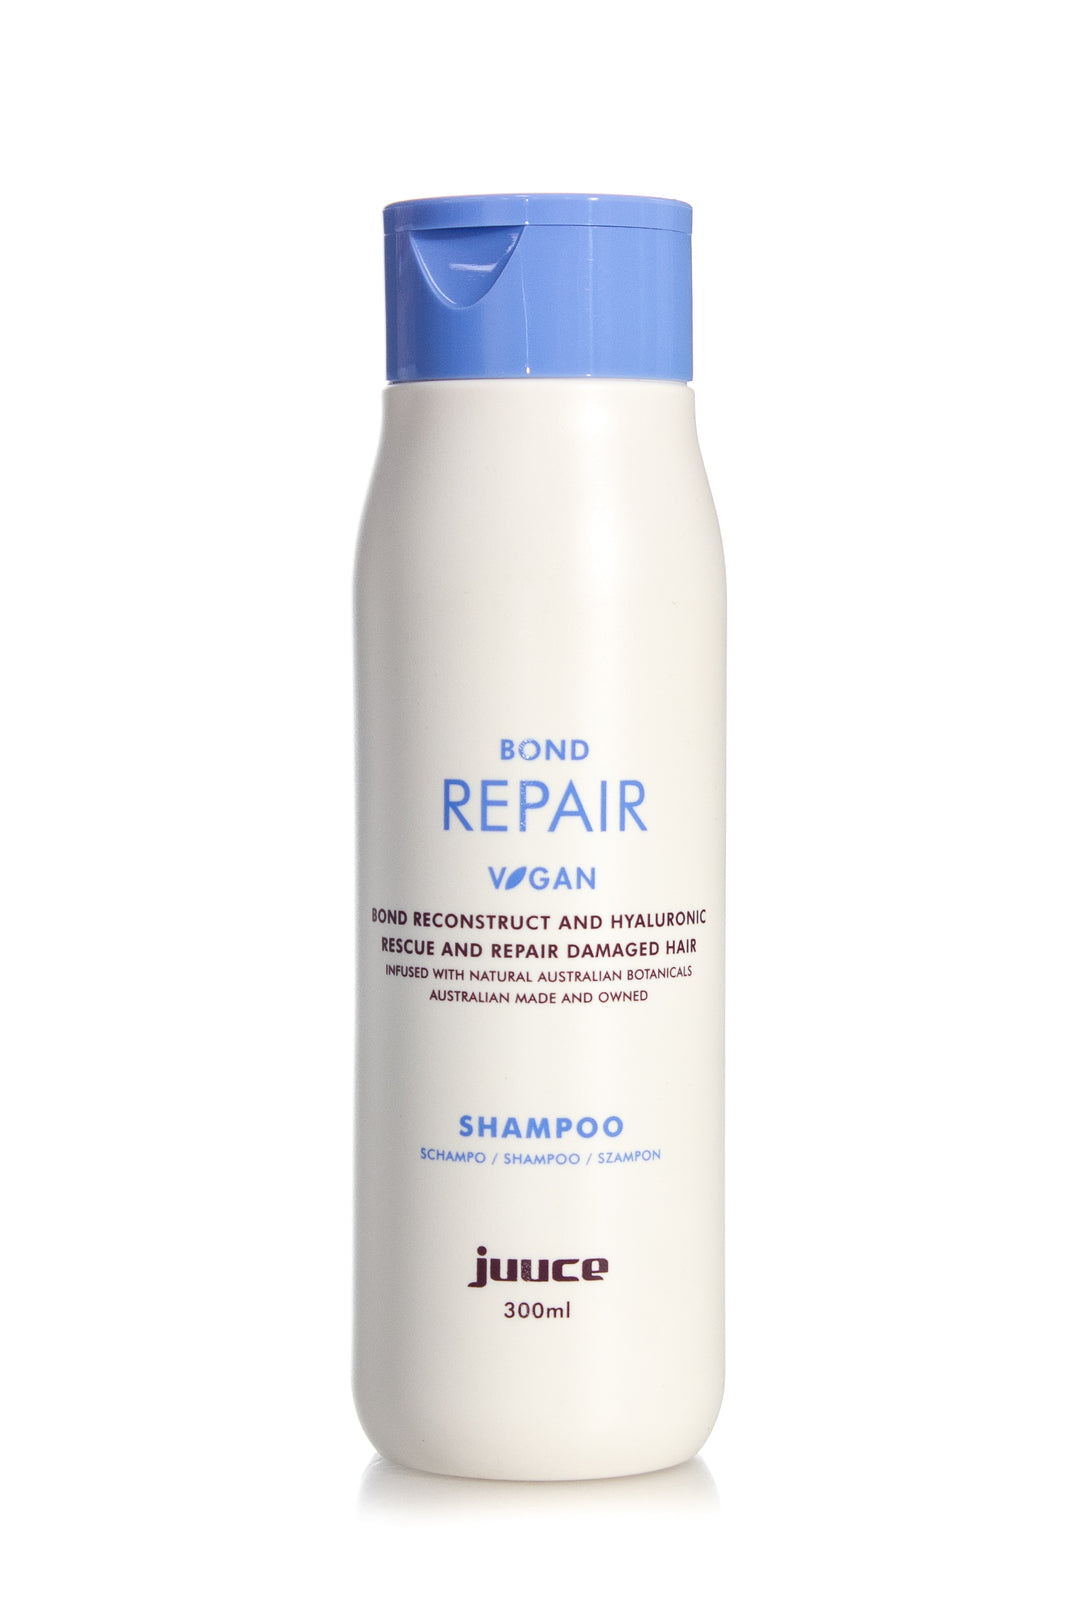 JUUCE Bond Repair Shampoo | Various Sizes